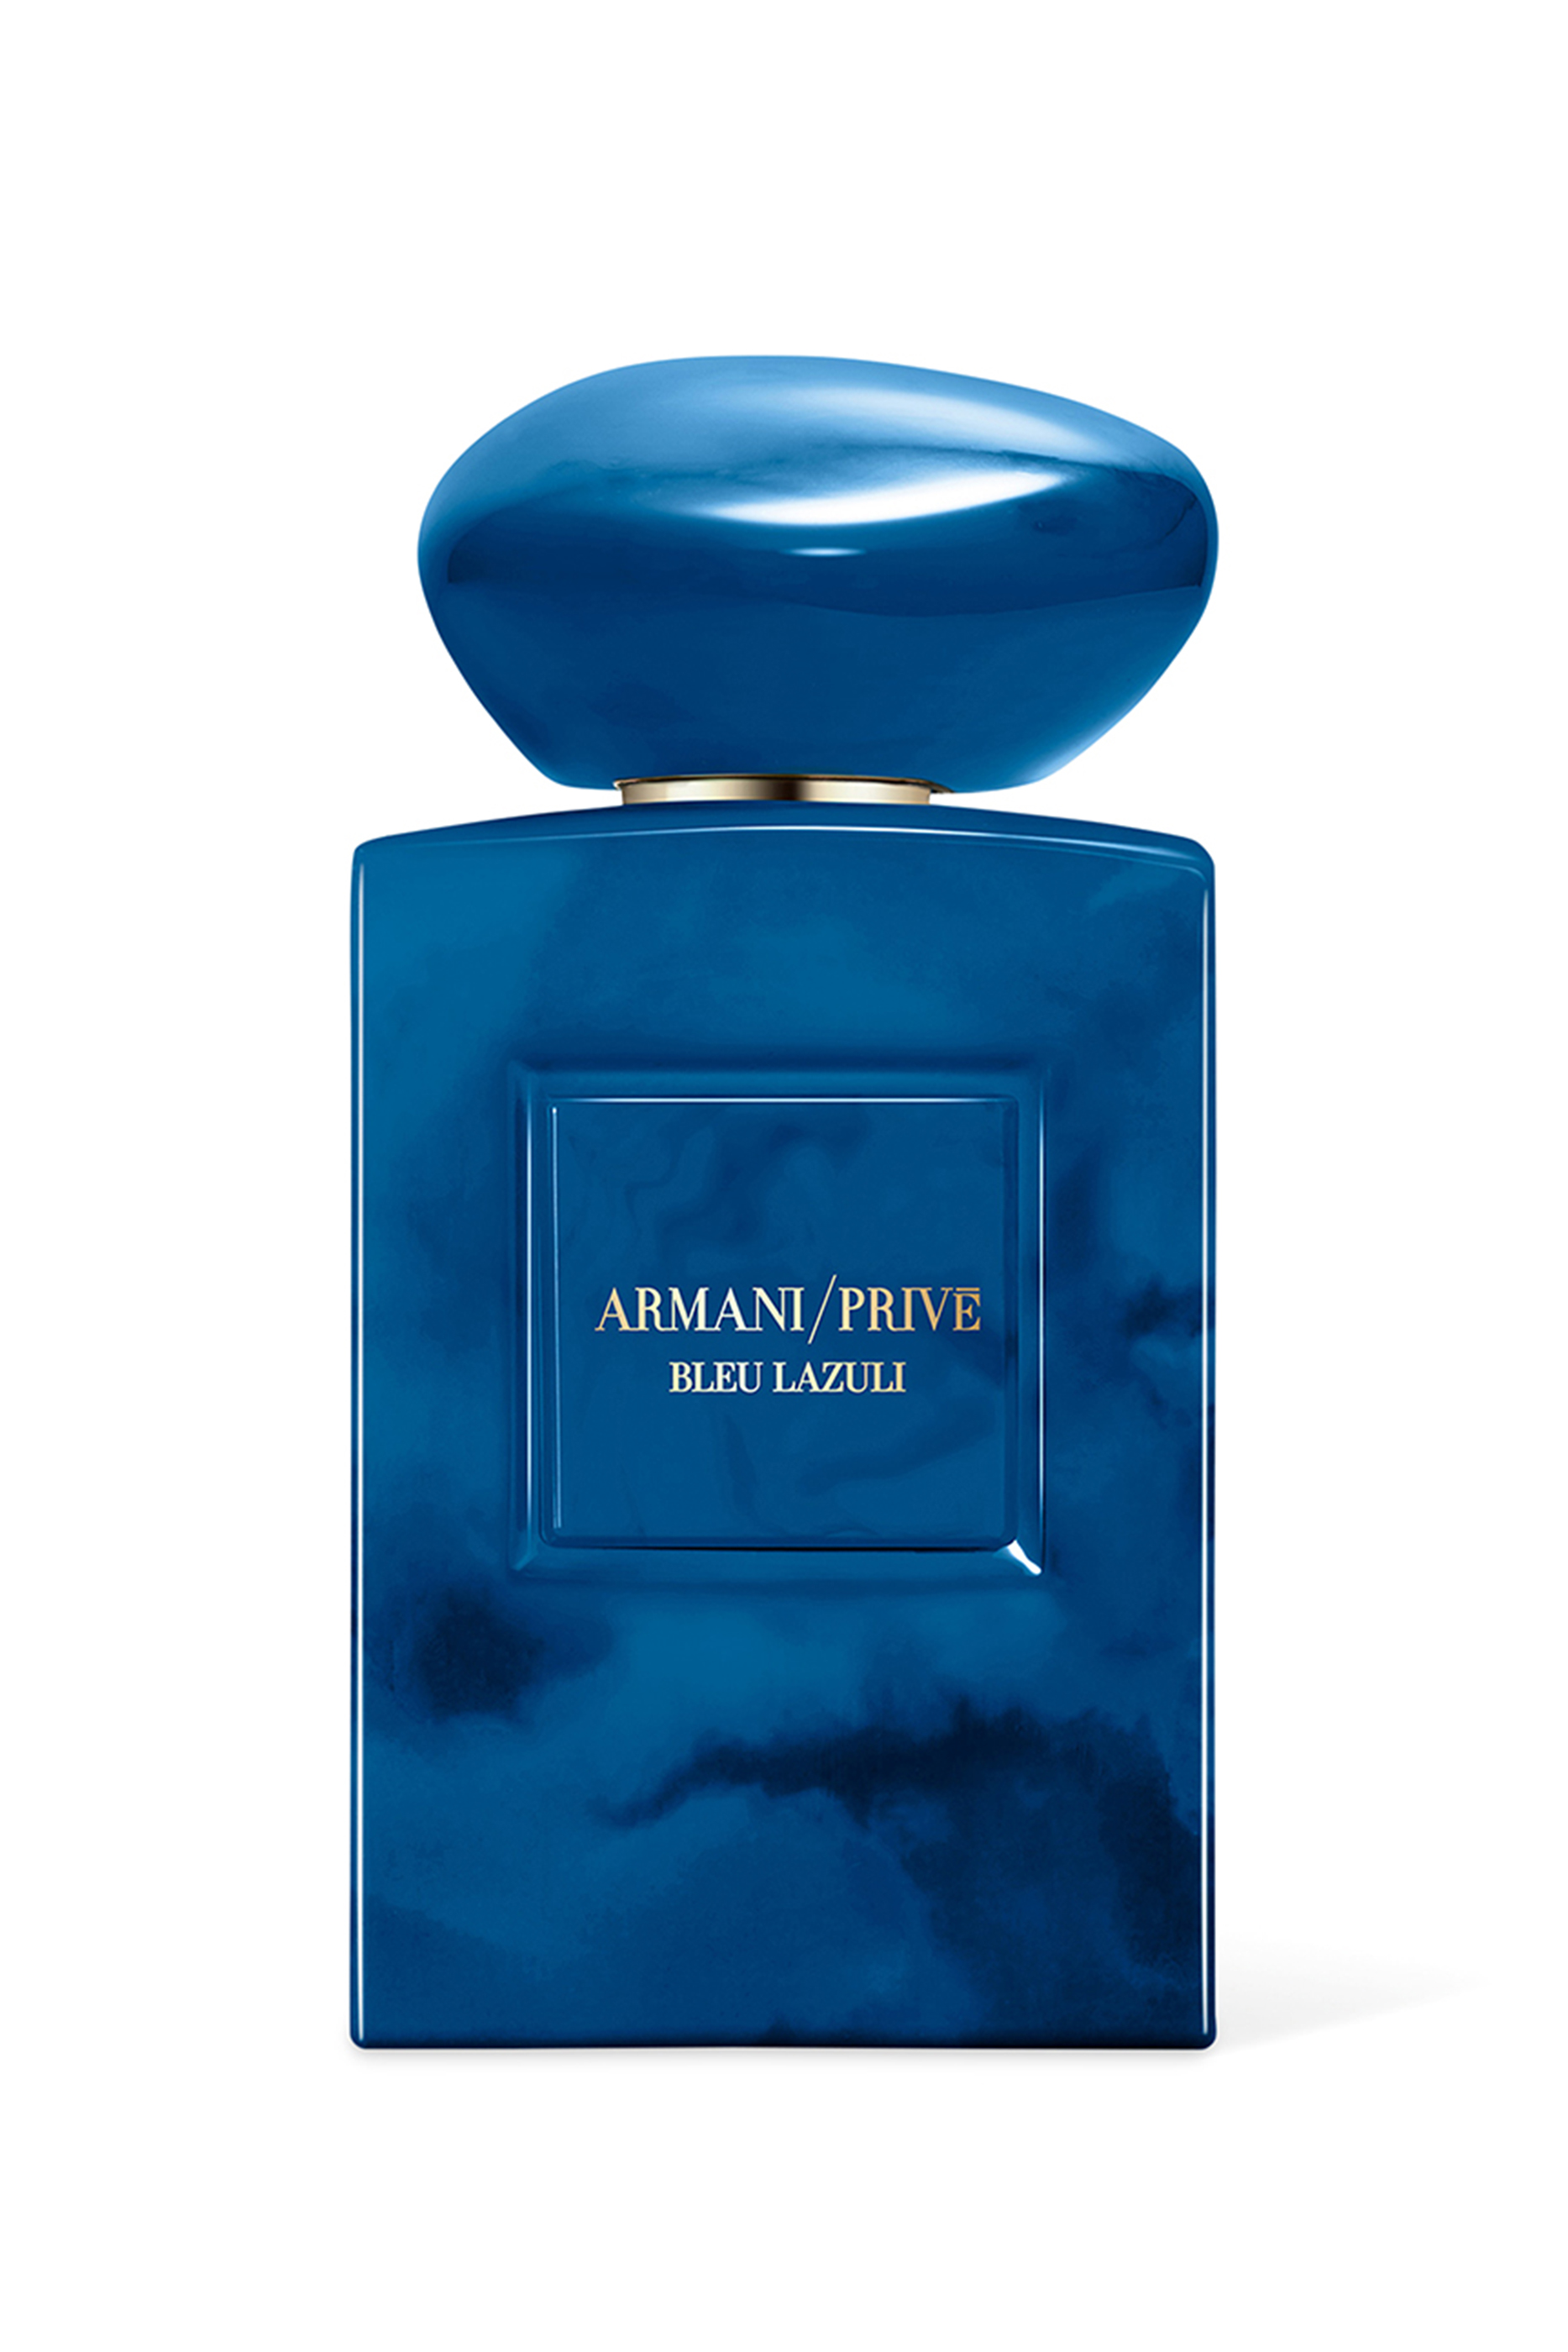 Армани приве духи. Духи Armani prive bleu Turquoise. Armani prive духи женские. Armani prive bleu Lazuli. Giorgio Armani Armani prive bleu Lazuli.